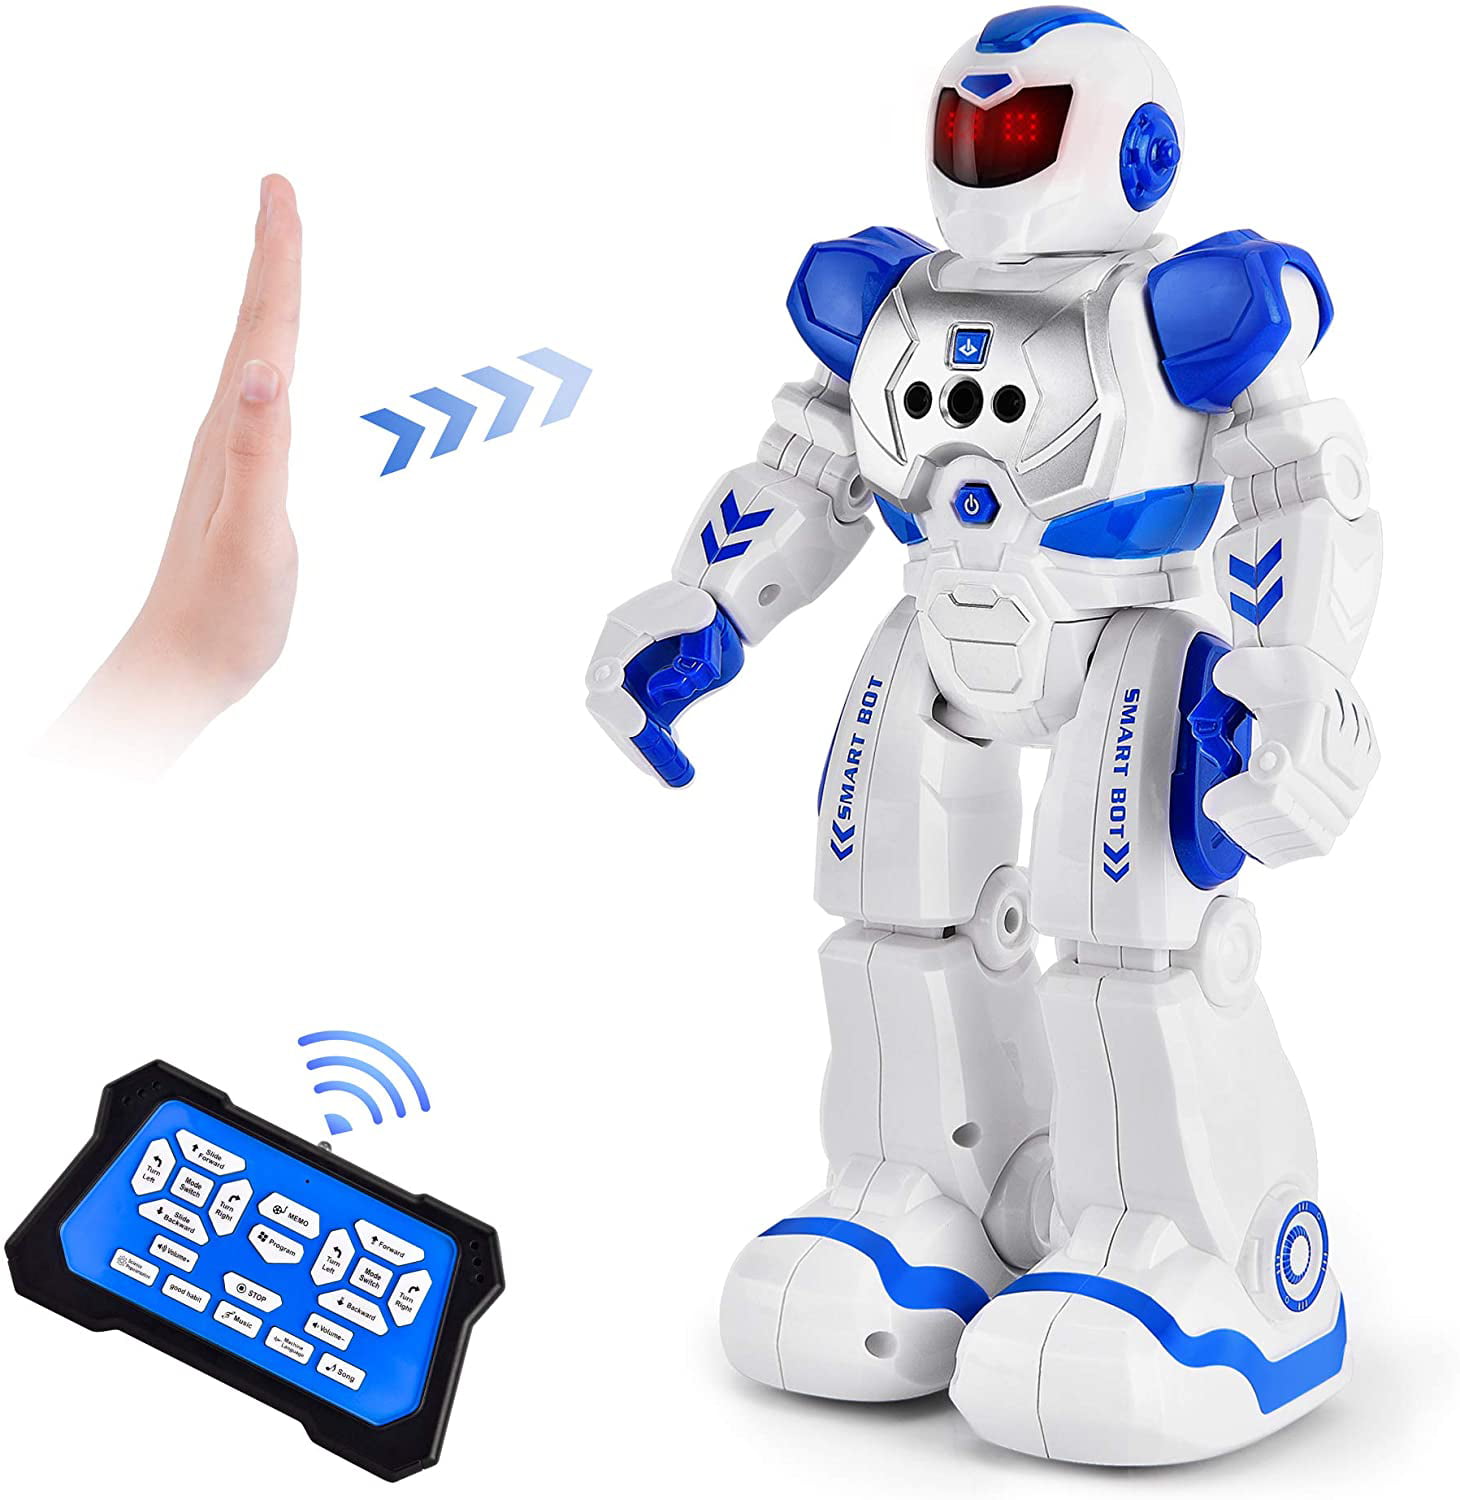 Smart Robot Toys Remote Control Robot Nice Gift for Boys Girls kids Blue